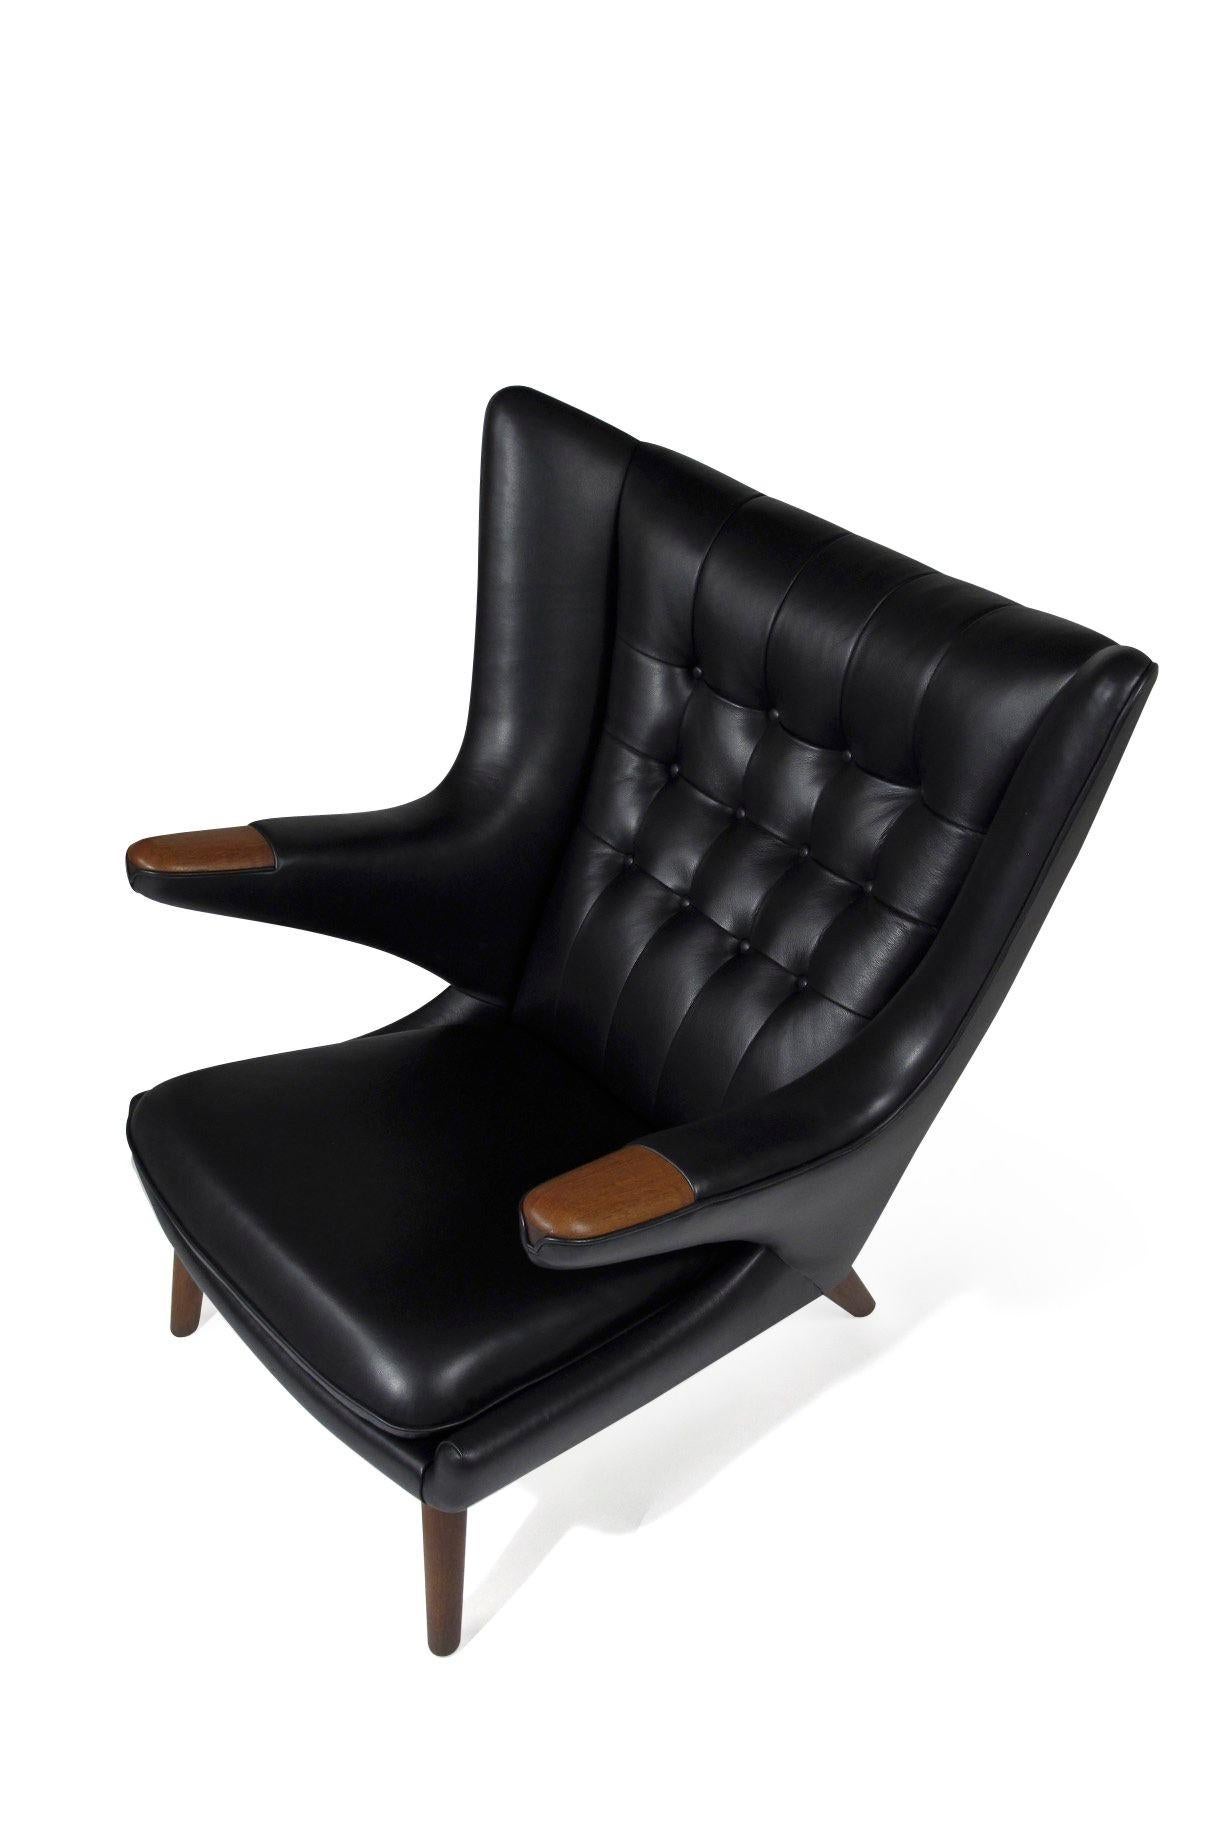 20th Century Hans J. Wegner Papa Bear Chair AP 19 & Ottoman AP 29 in Leather For Sale